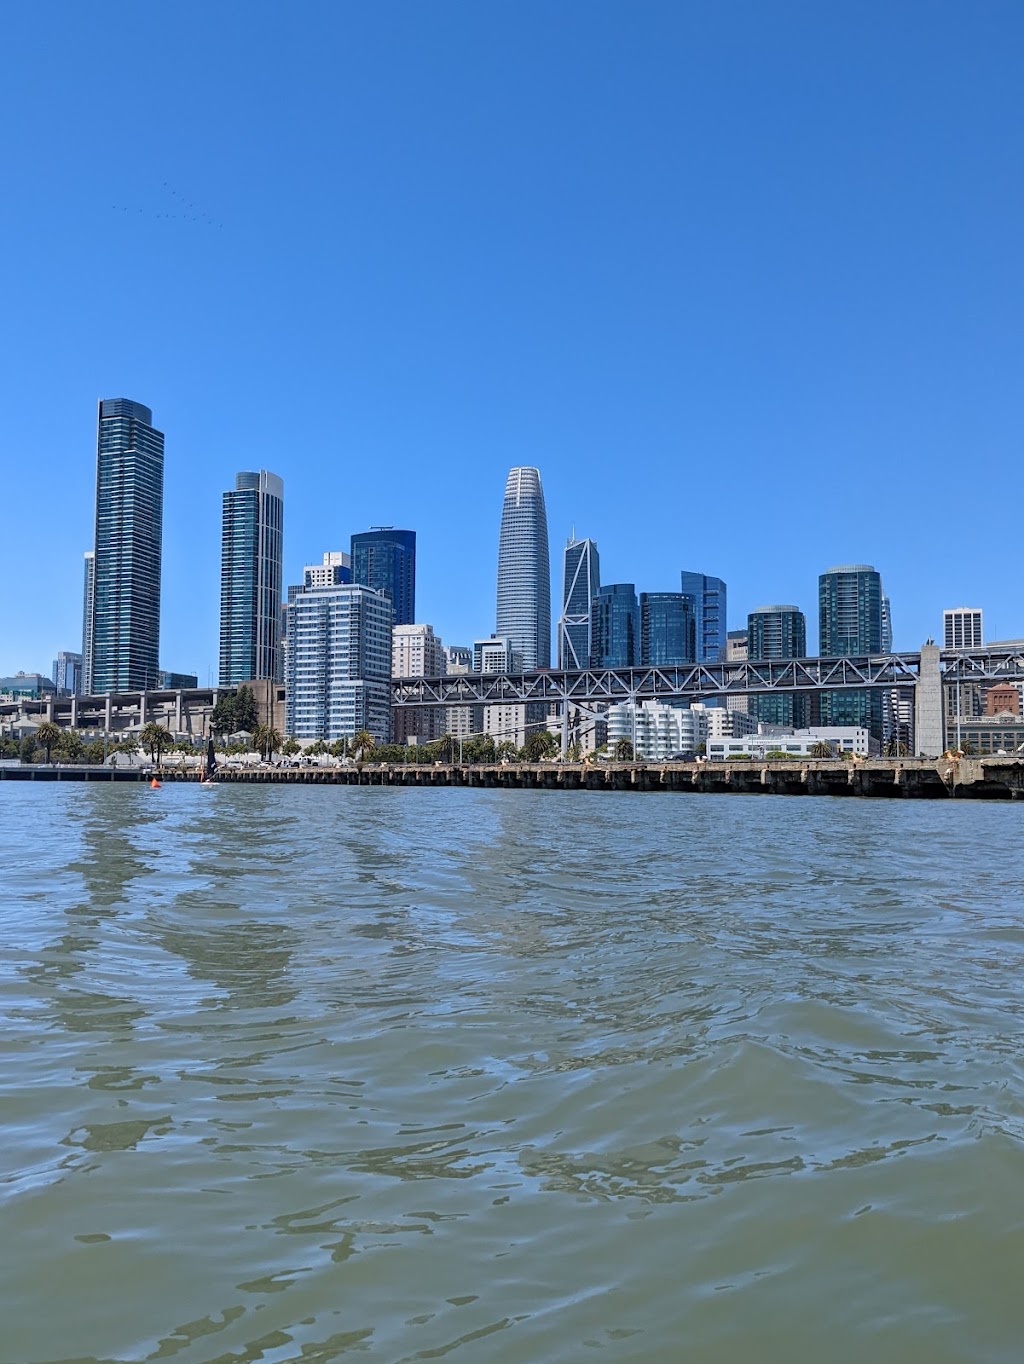 City Kayak | 40 Pier, San Francisco, CA 94107 | Phone: (888) 966-0953